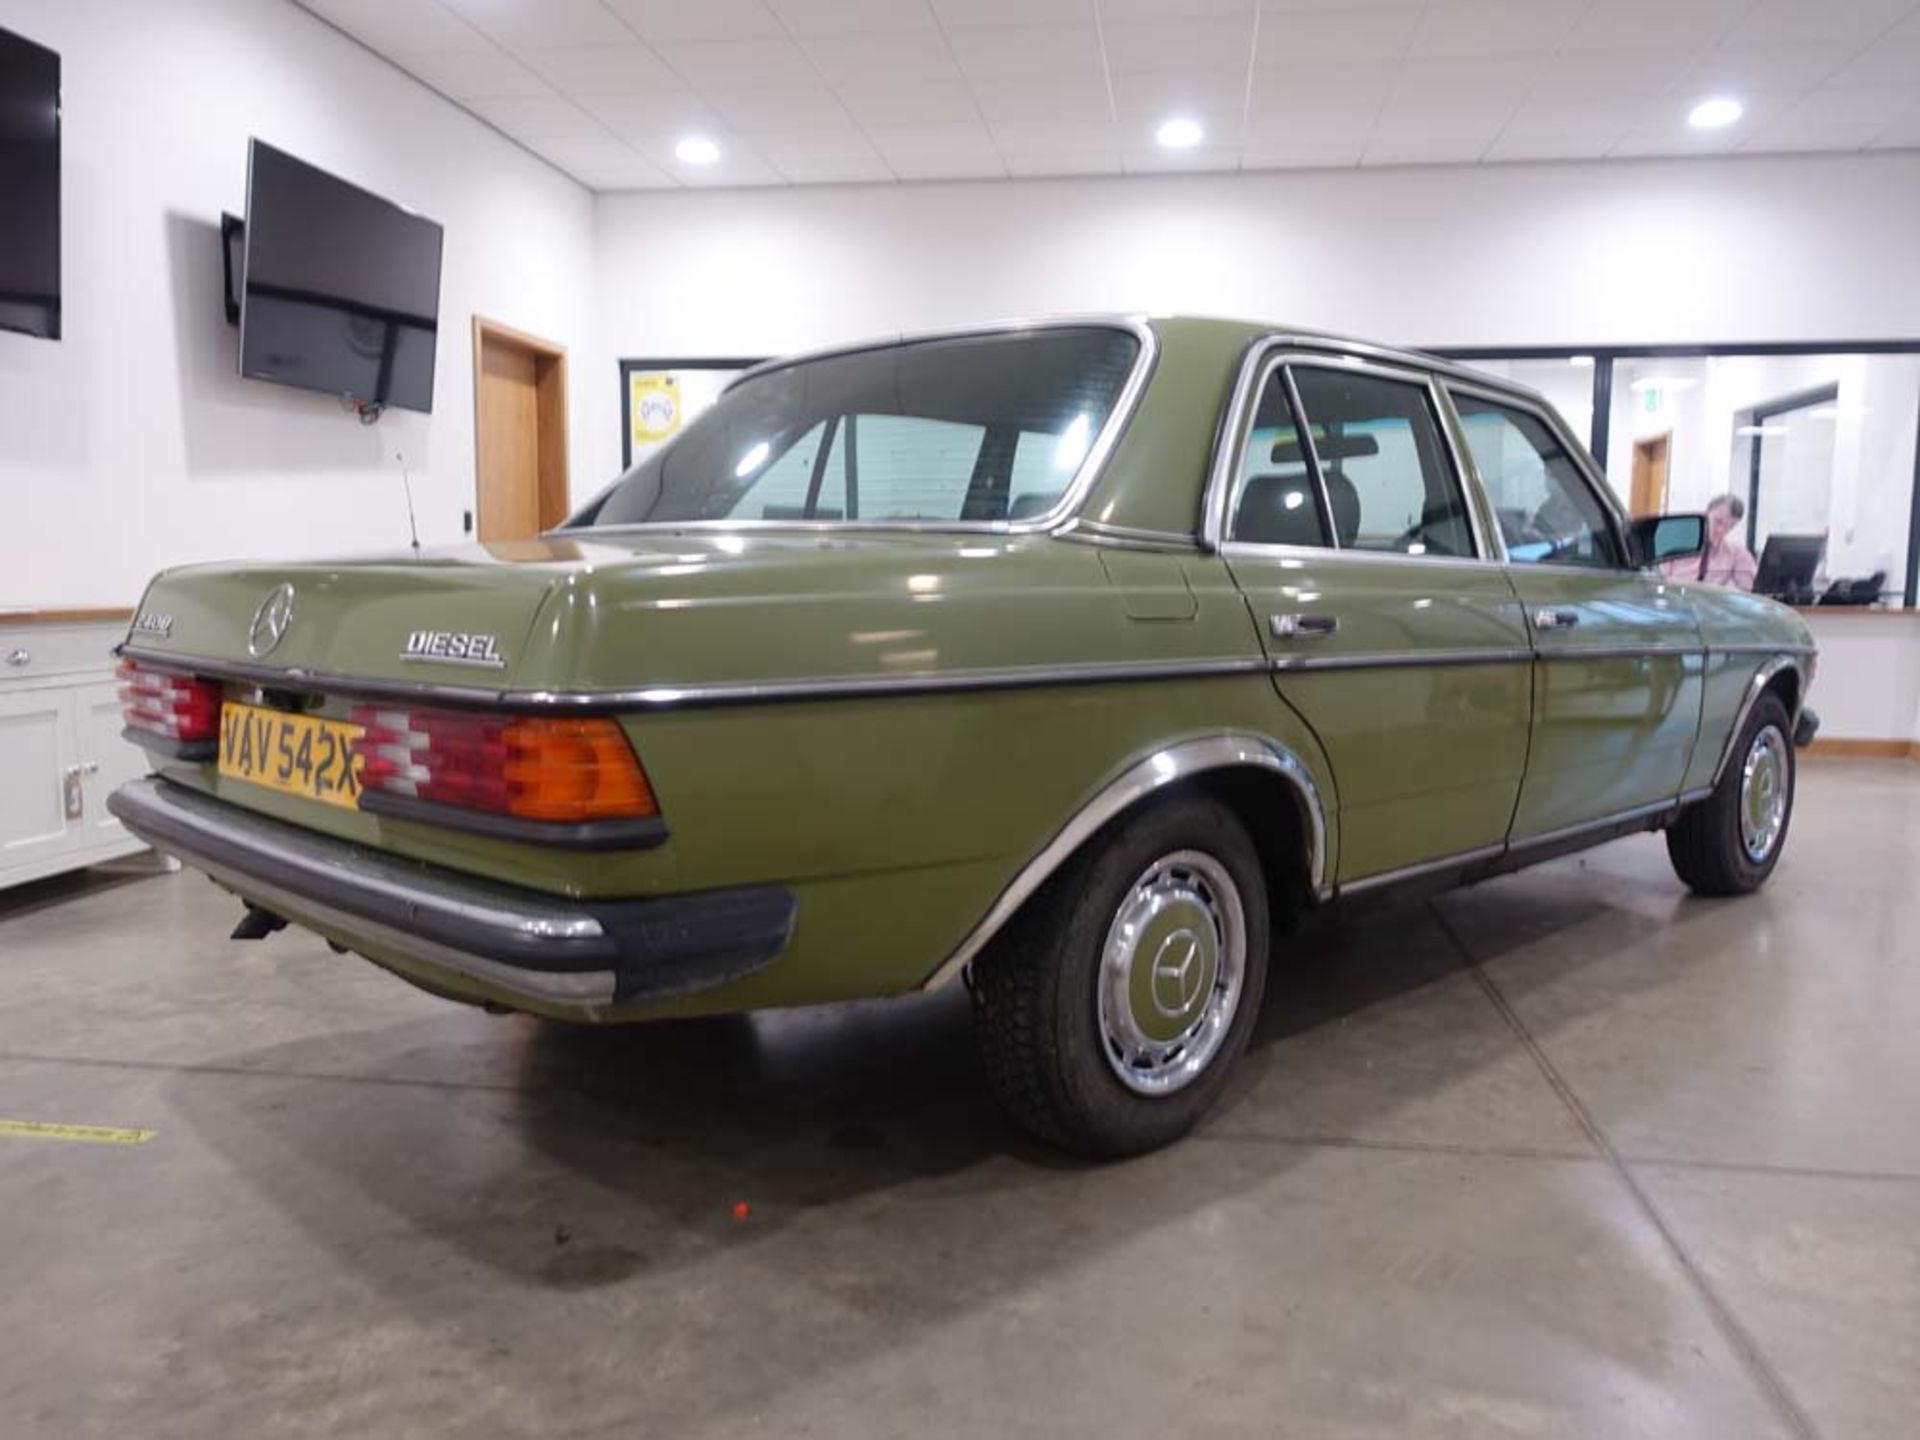 1982 Mercedes 240 D, 4 door saloon, diesel, first registered 17.05.1982, in green, registration - Image 3 of 9